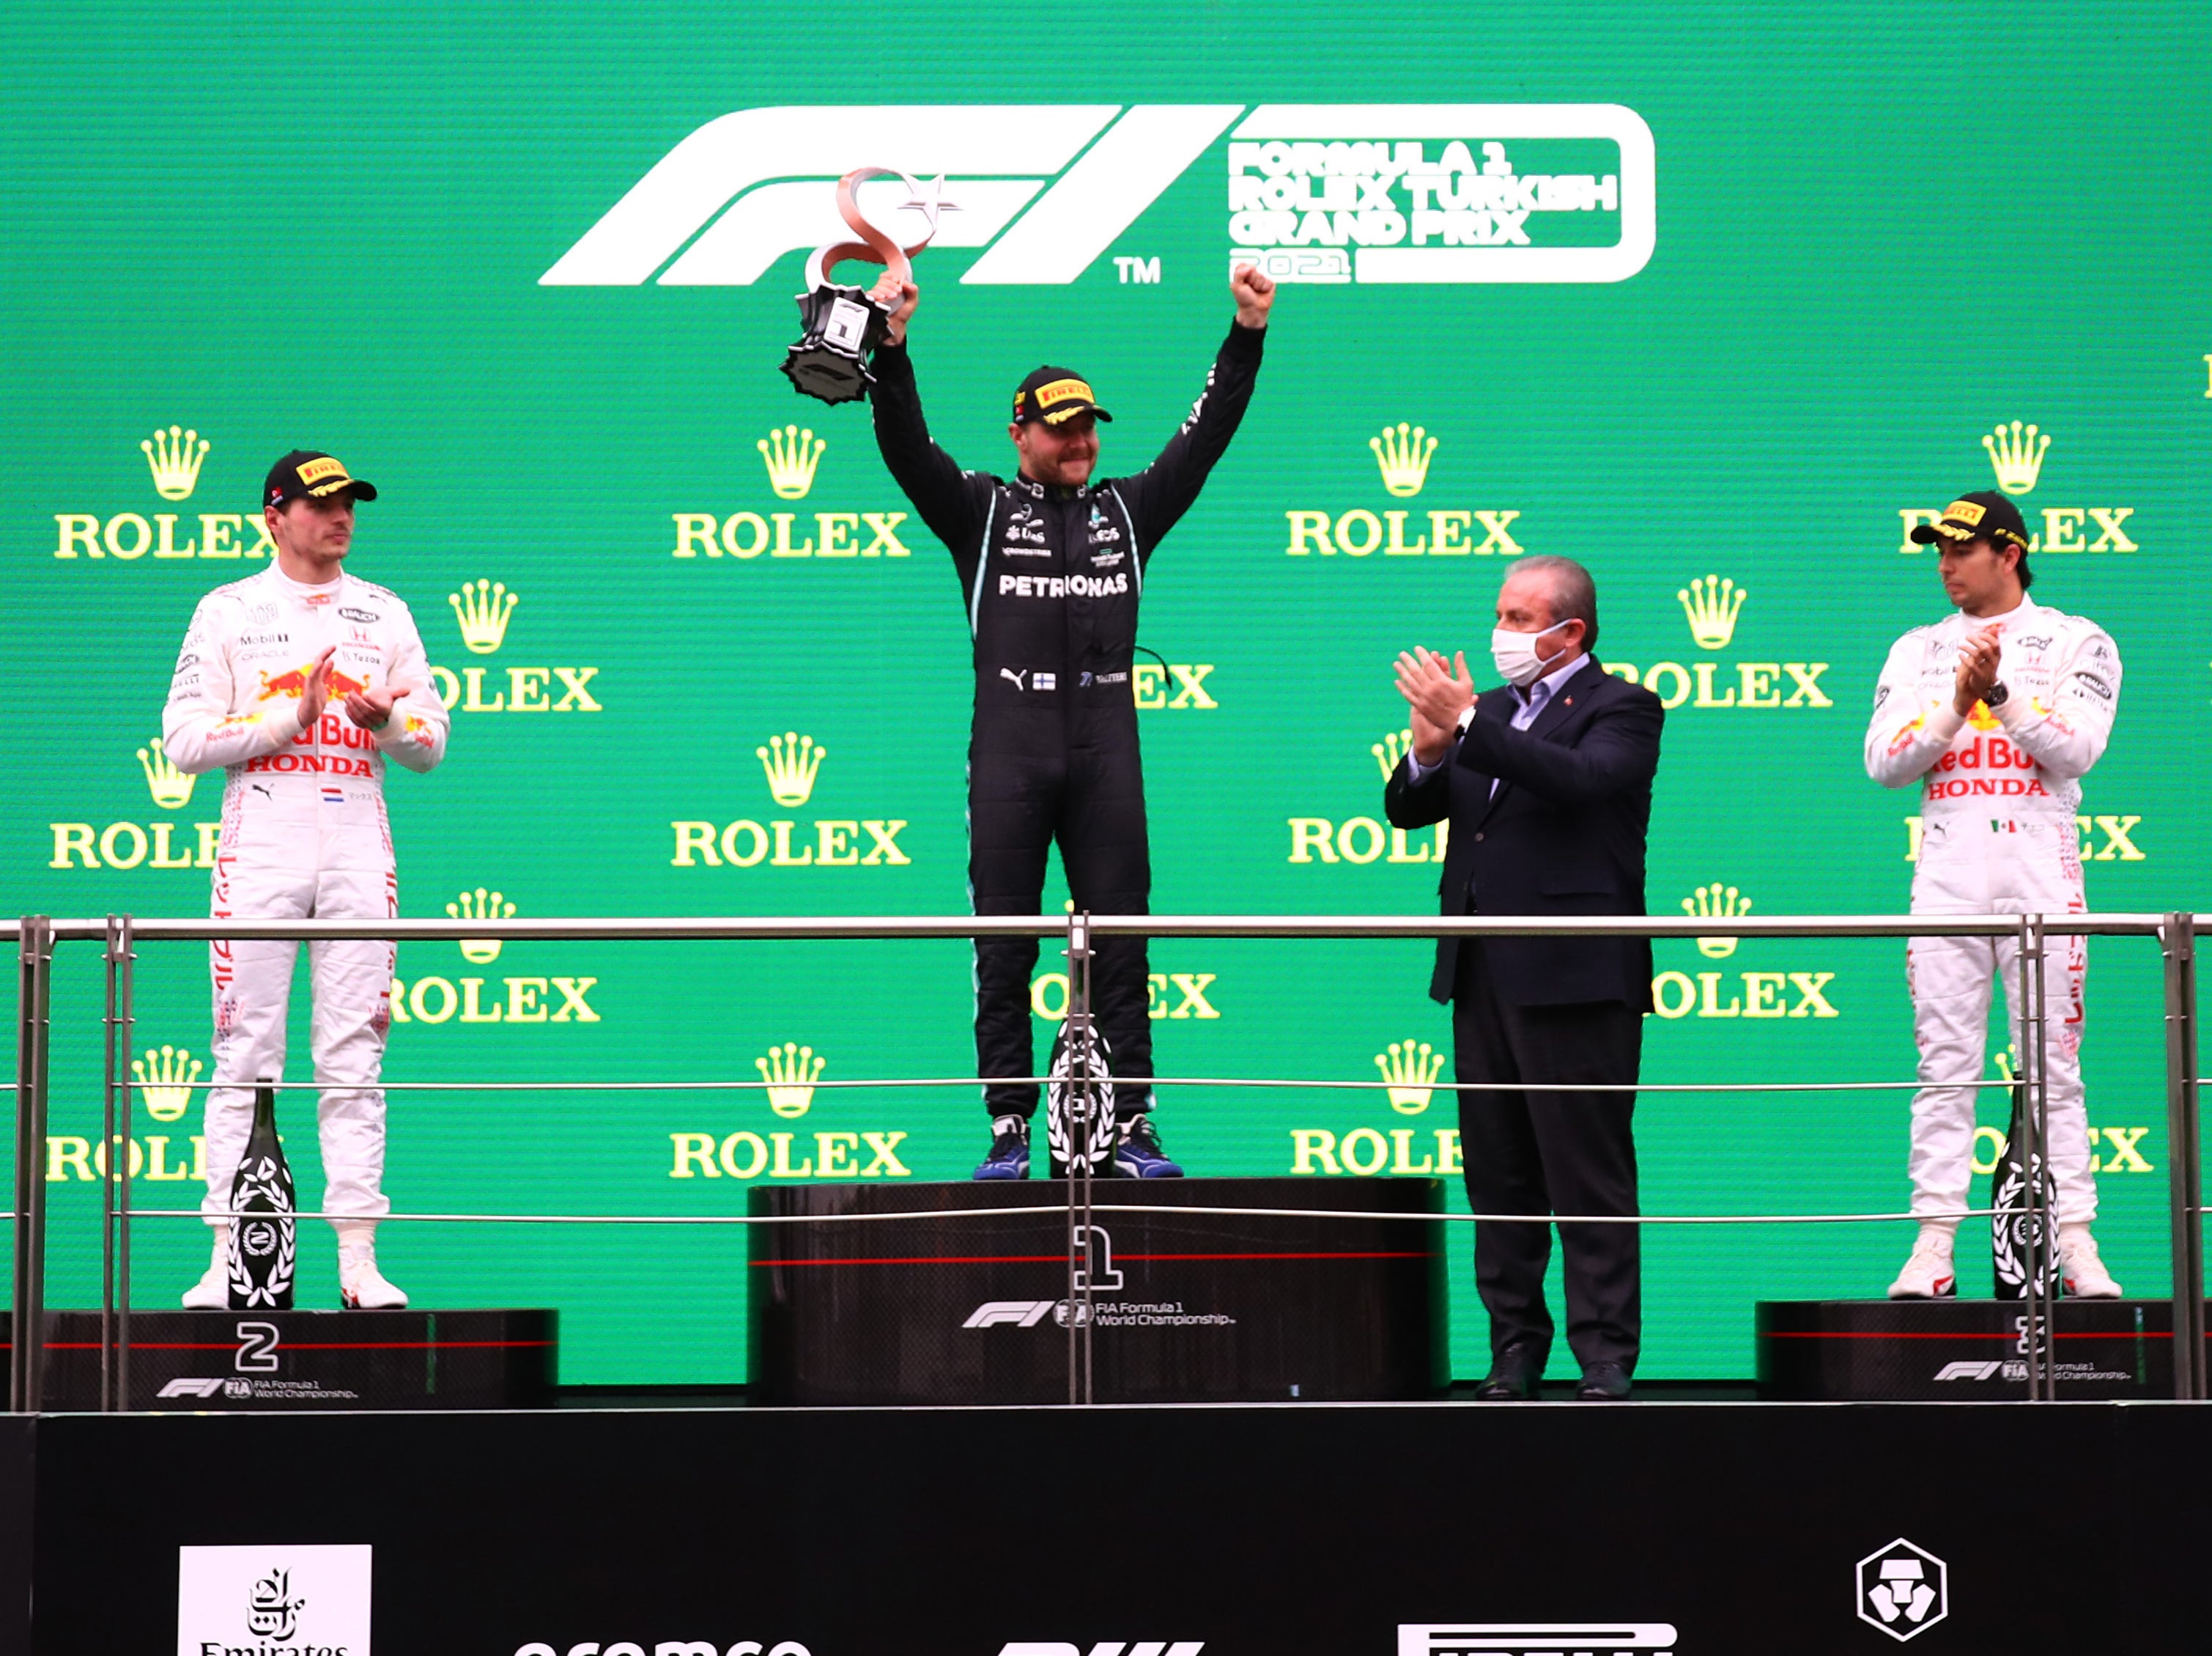 Valtteri Bottas topped the podium ahead of Max Verstappen and Sergio Perez